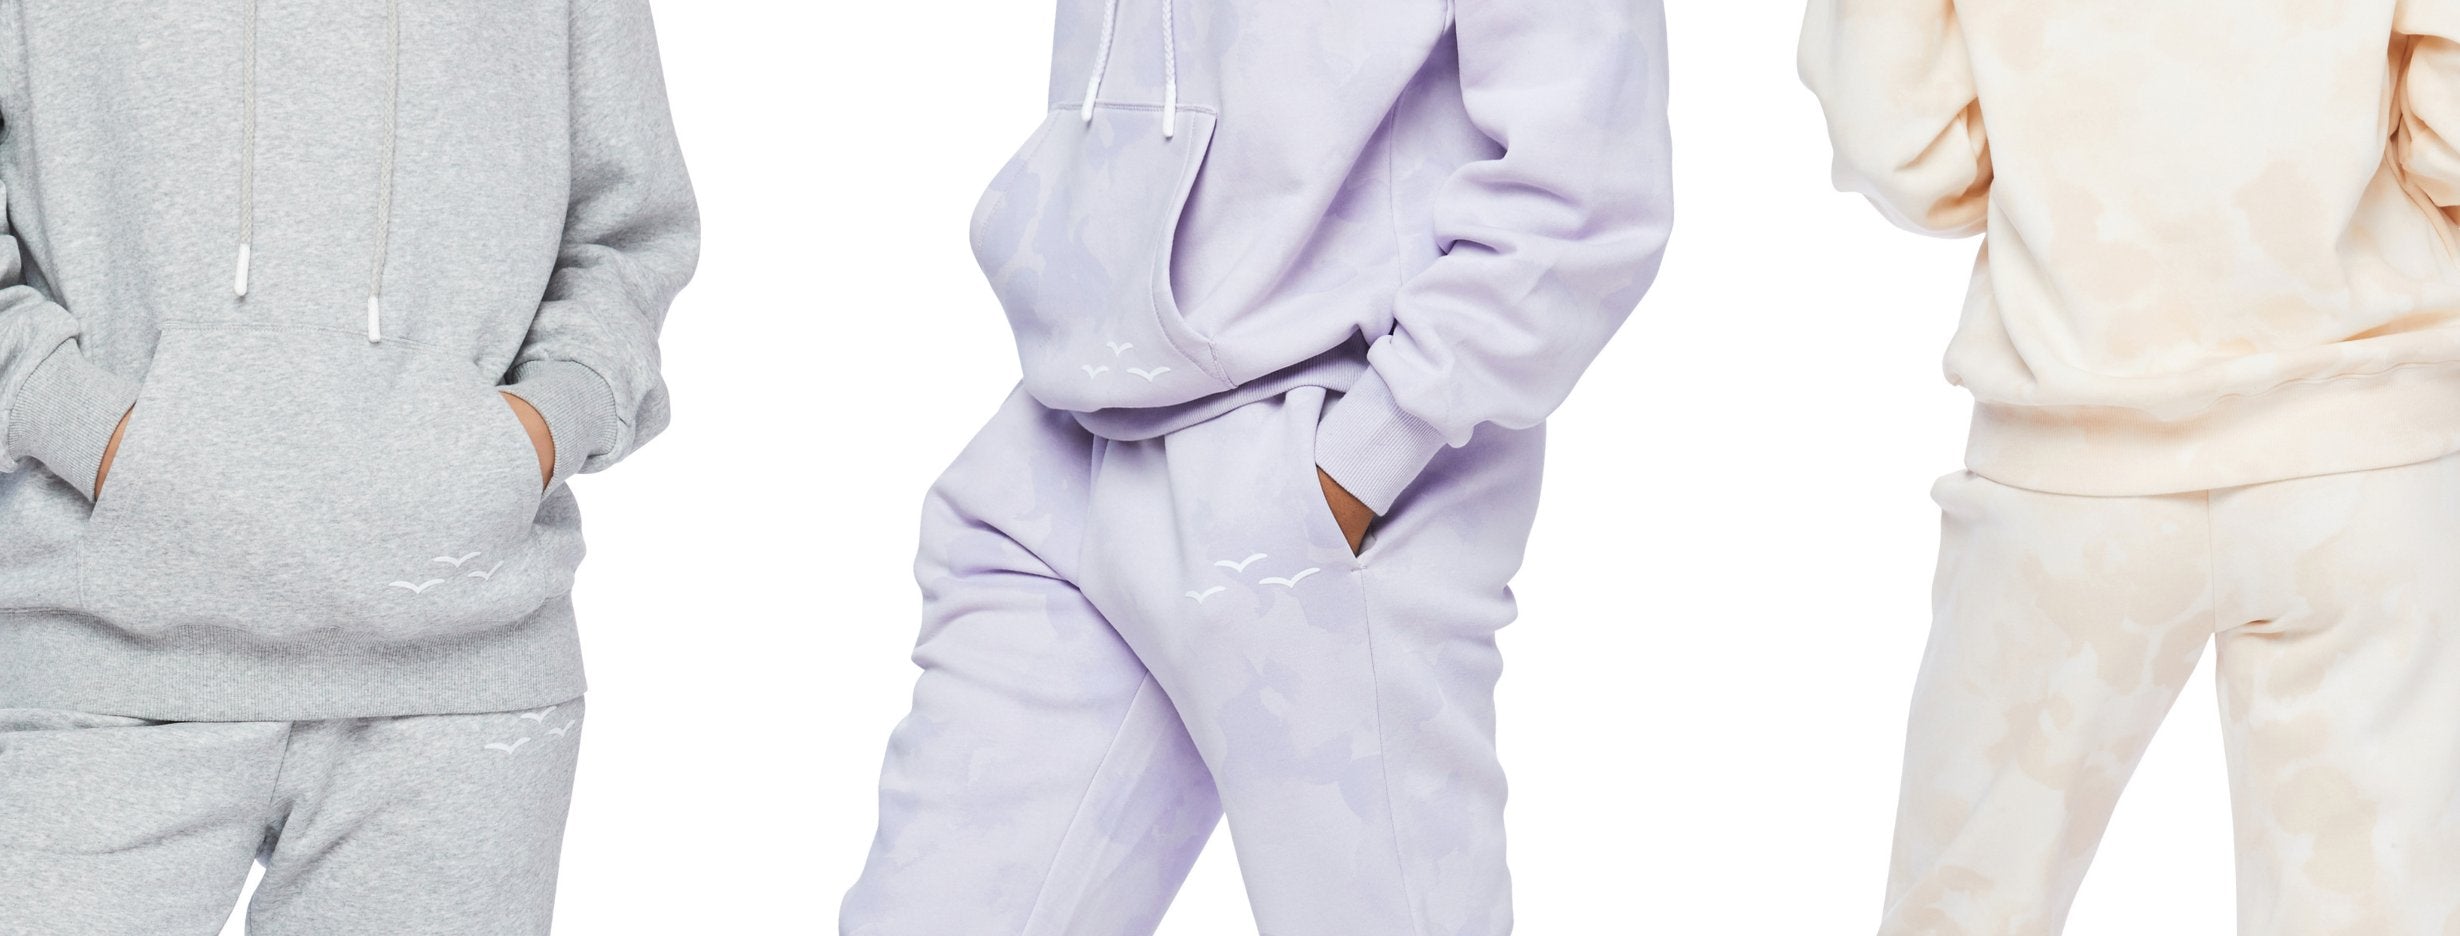 ZIZOCWA Sweat Pants Set for Women Dressy Outfits for Women Womens